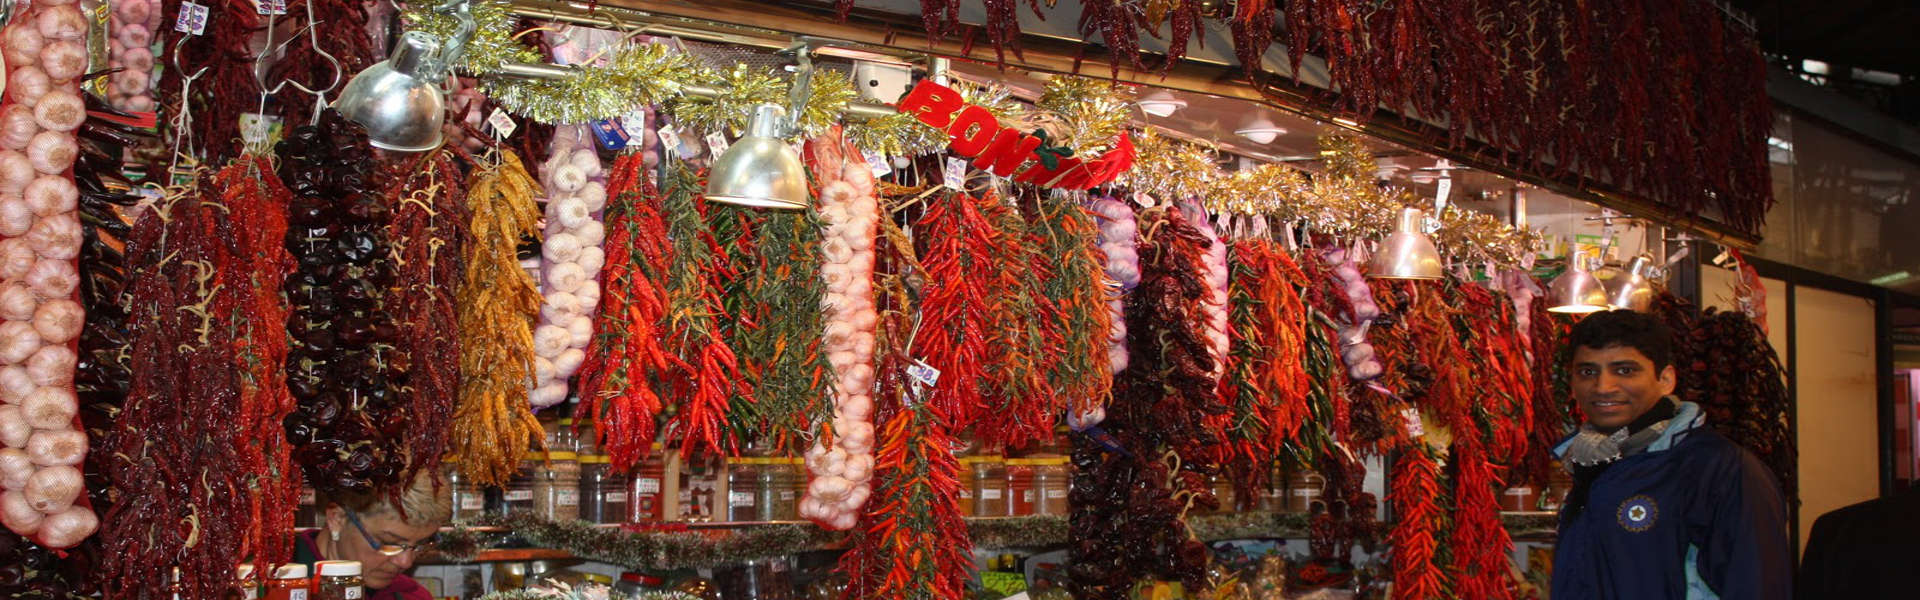 chili-market